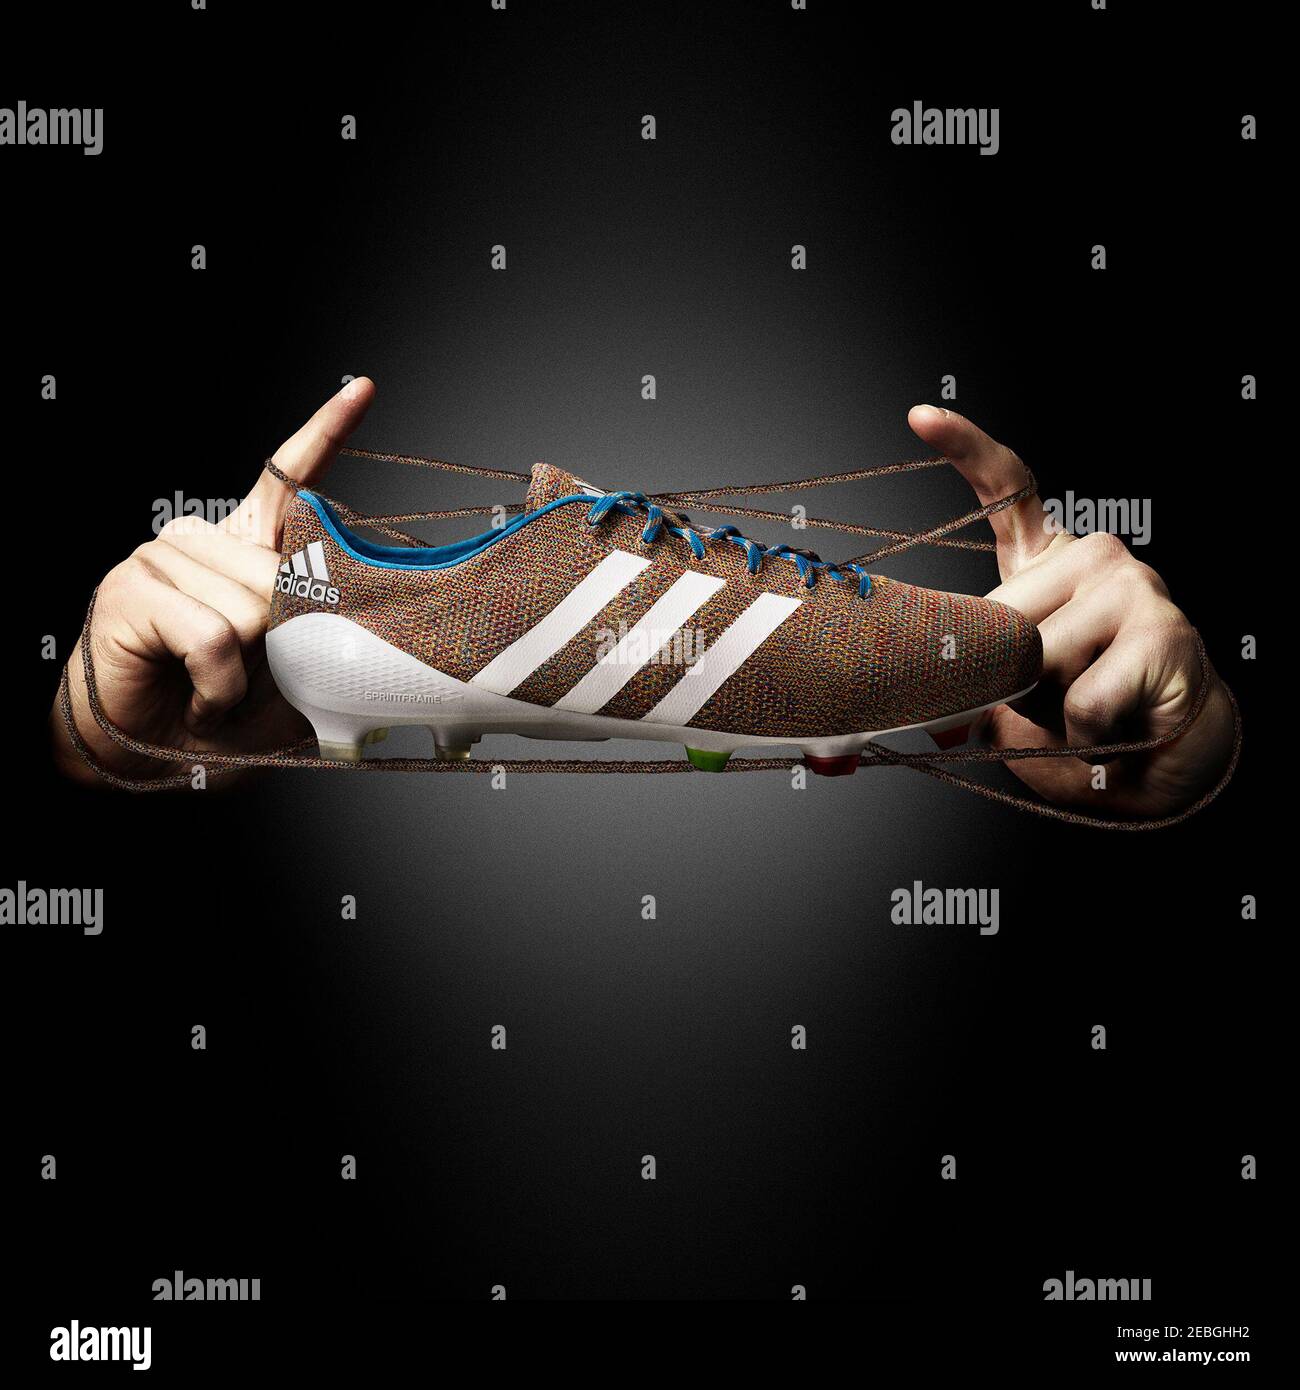 Calcio - Luis Suarez nuovo lancio di scarpe da calcio Adidas Football  presenta la prima scarpa da calcio a maglia al mondo, le scarpe da calcio  adidas Samba primeknit Luis Suarez lancia